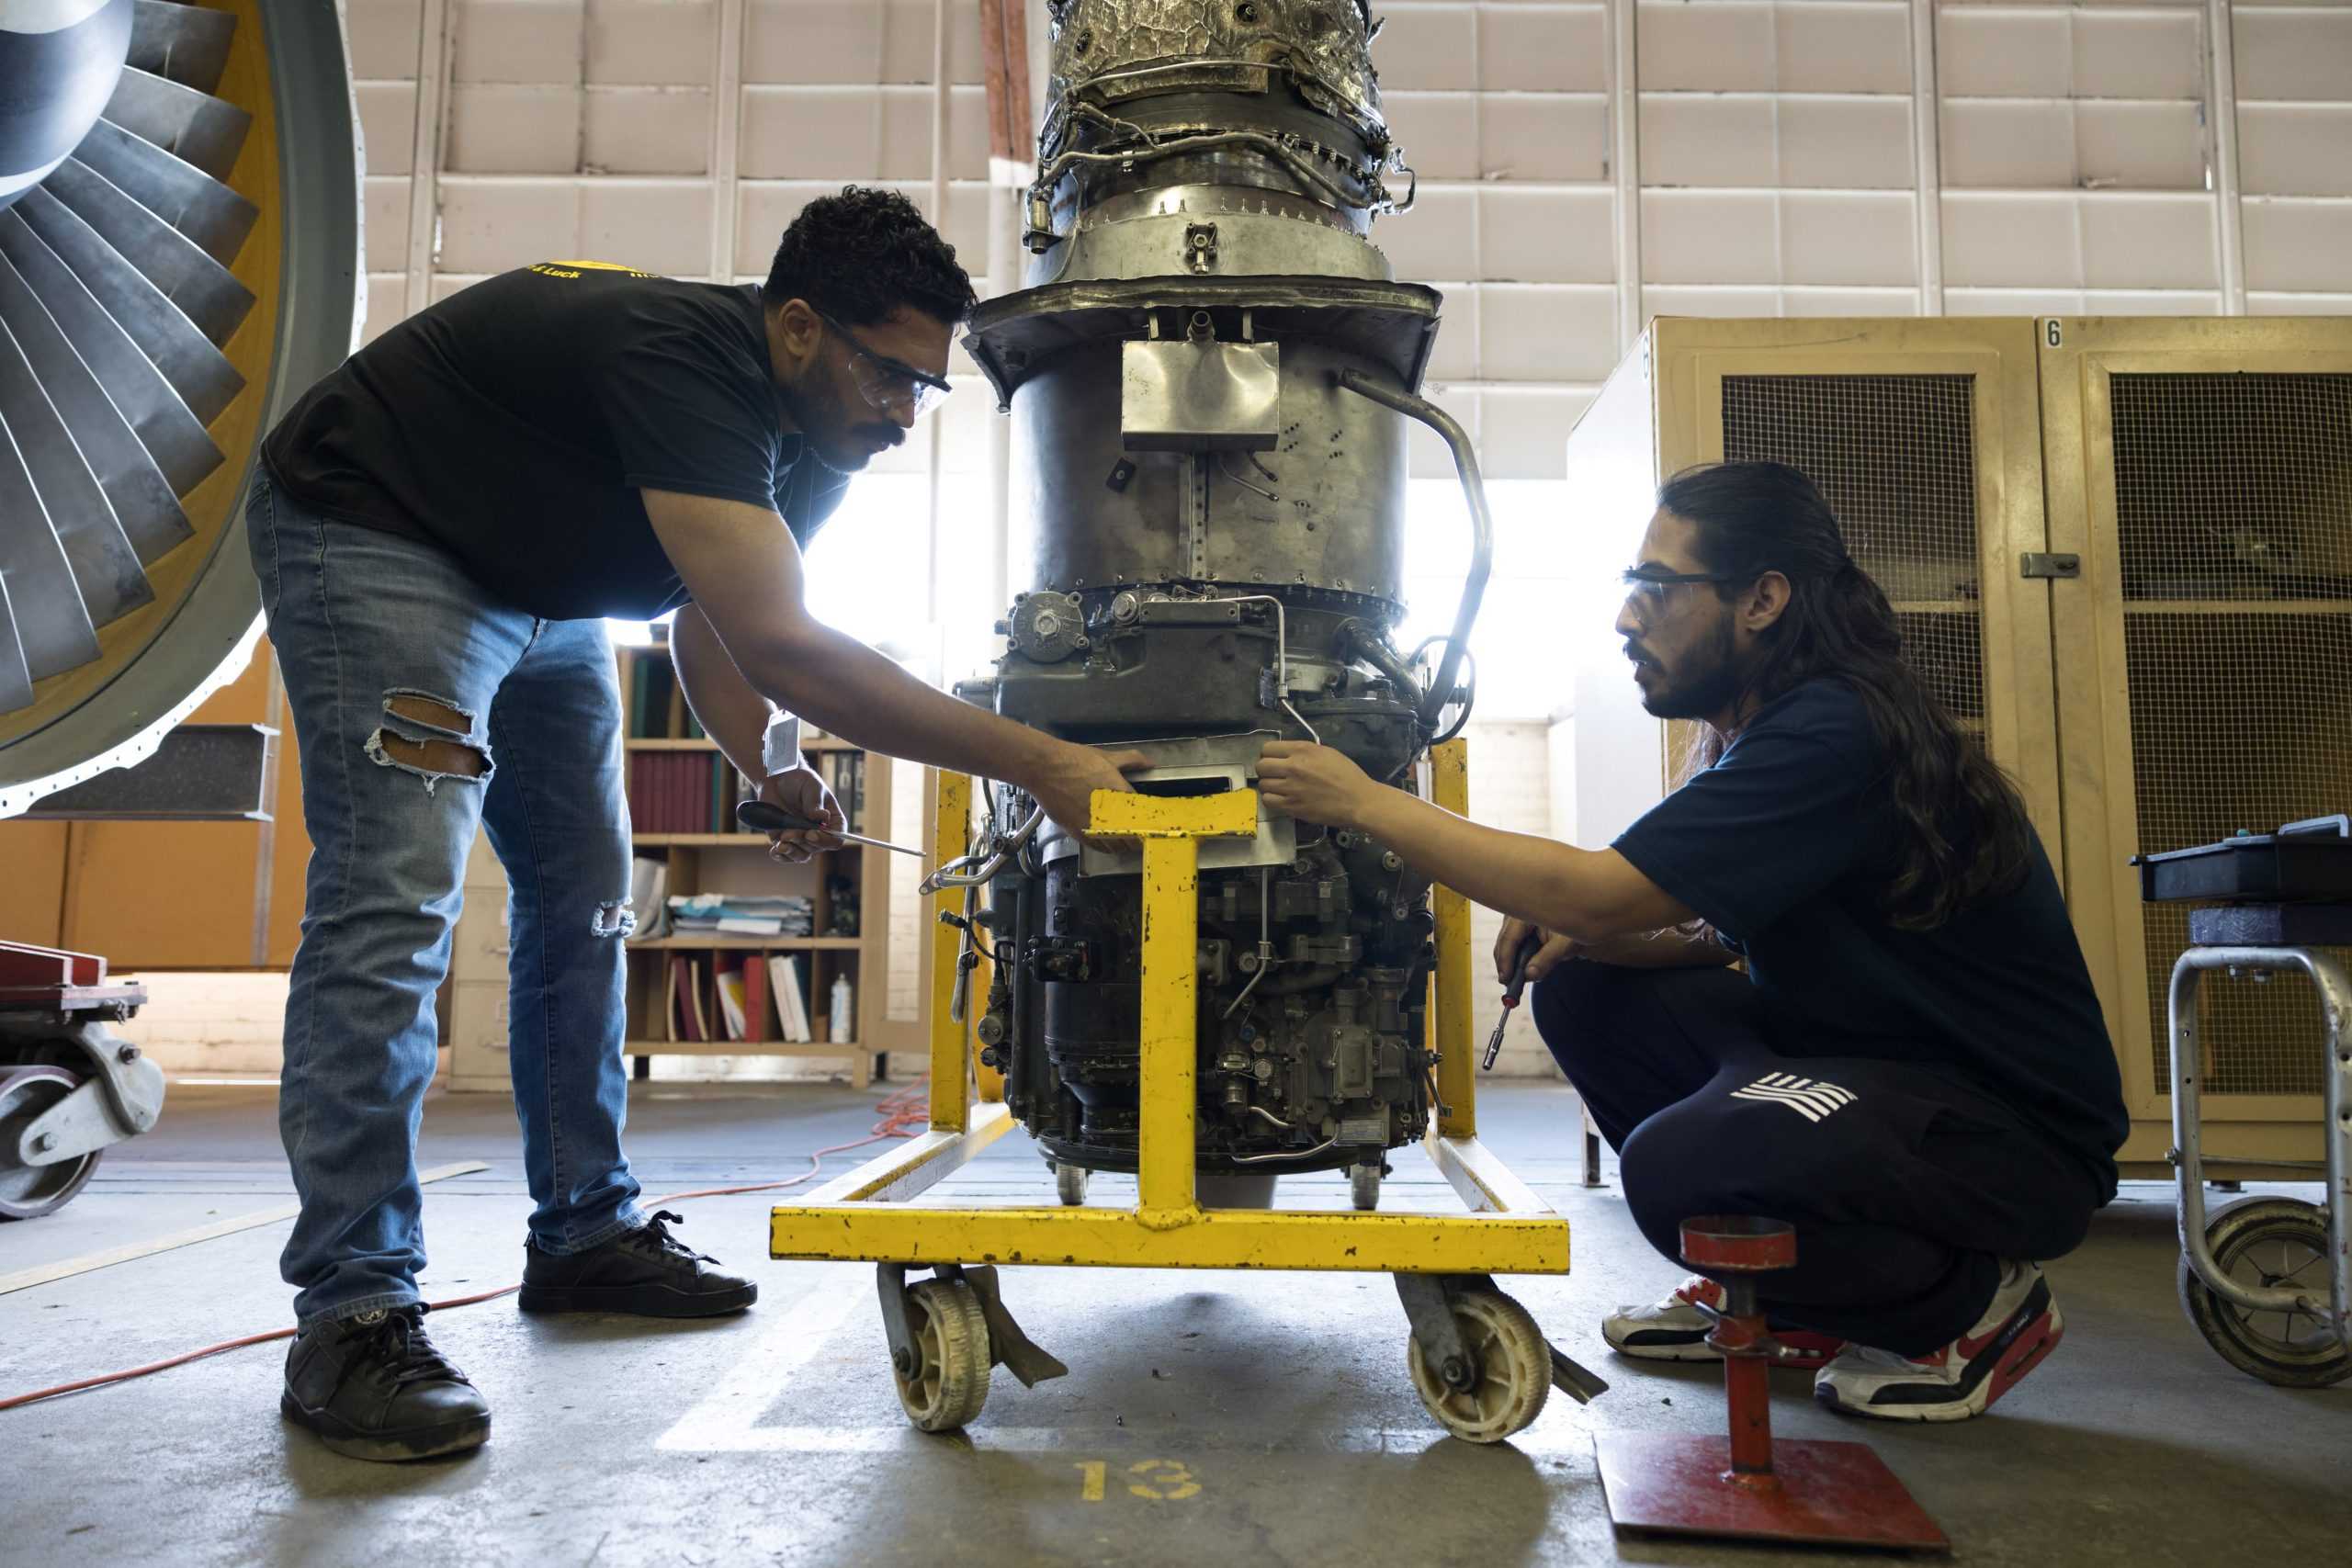 AMT students working on examining turbine engine